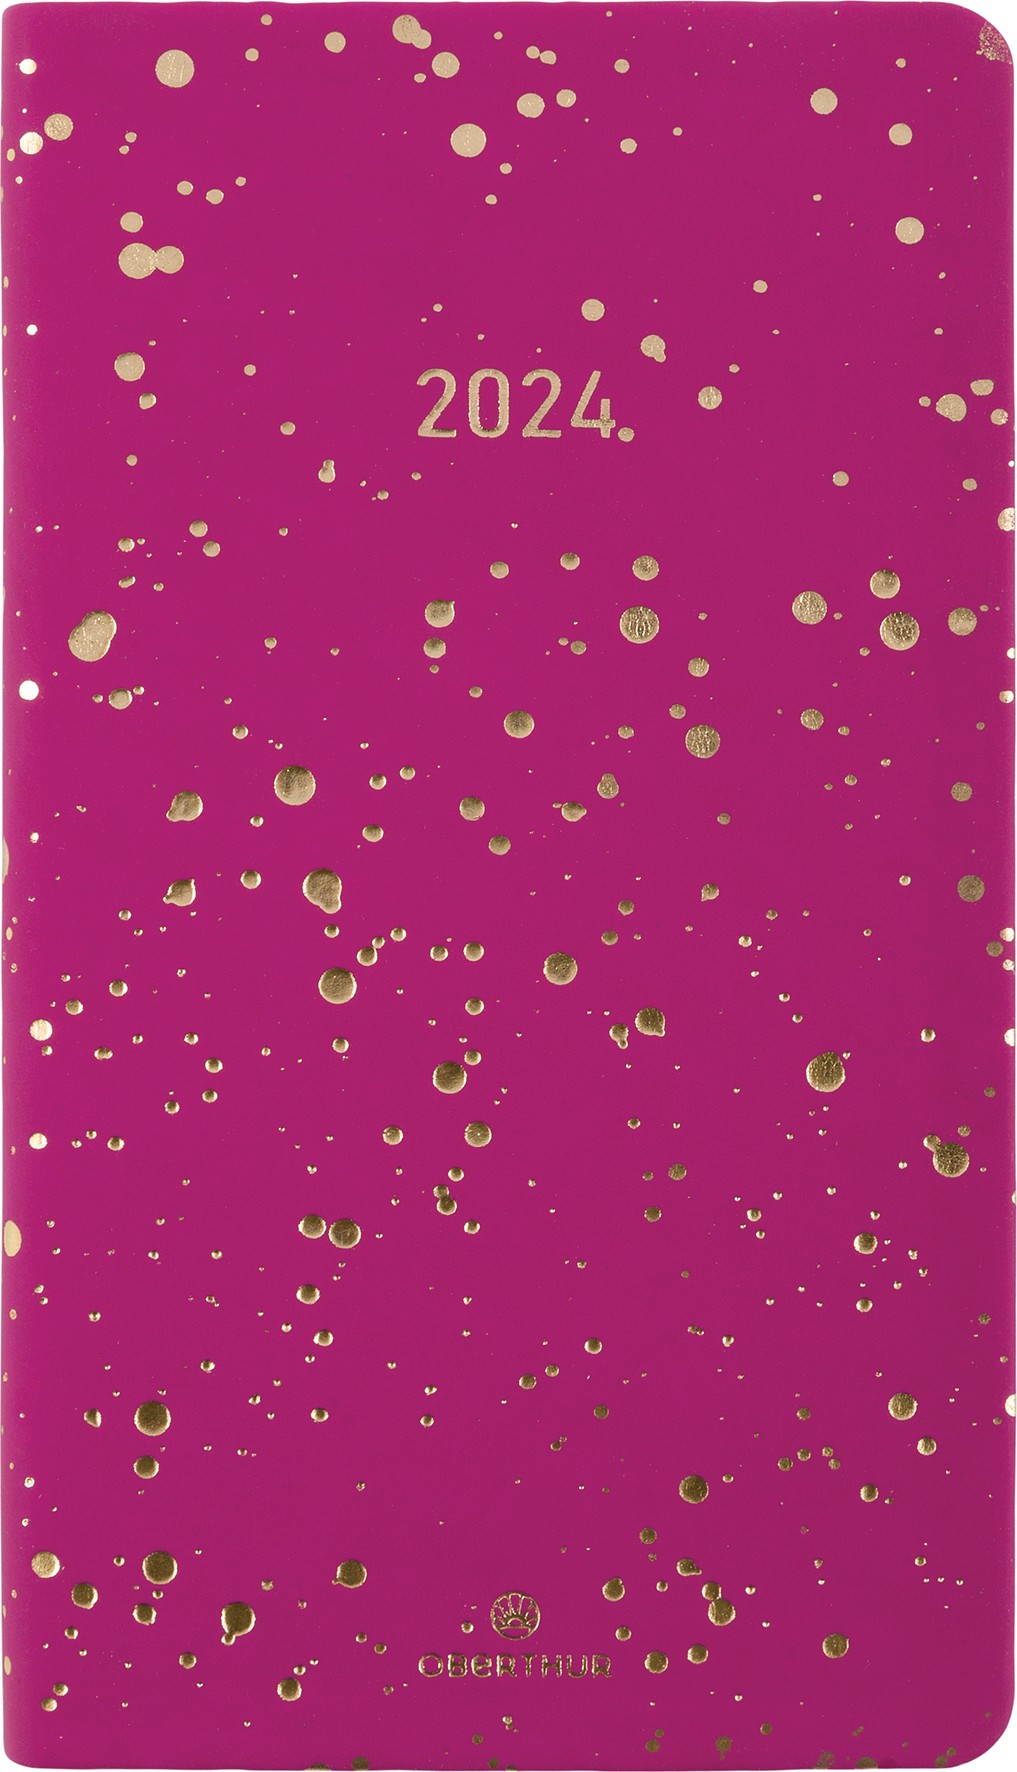 Agenda scolaire 2023/2024 - Rose pailleté -12 x 17 cm - Exacompta